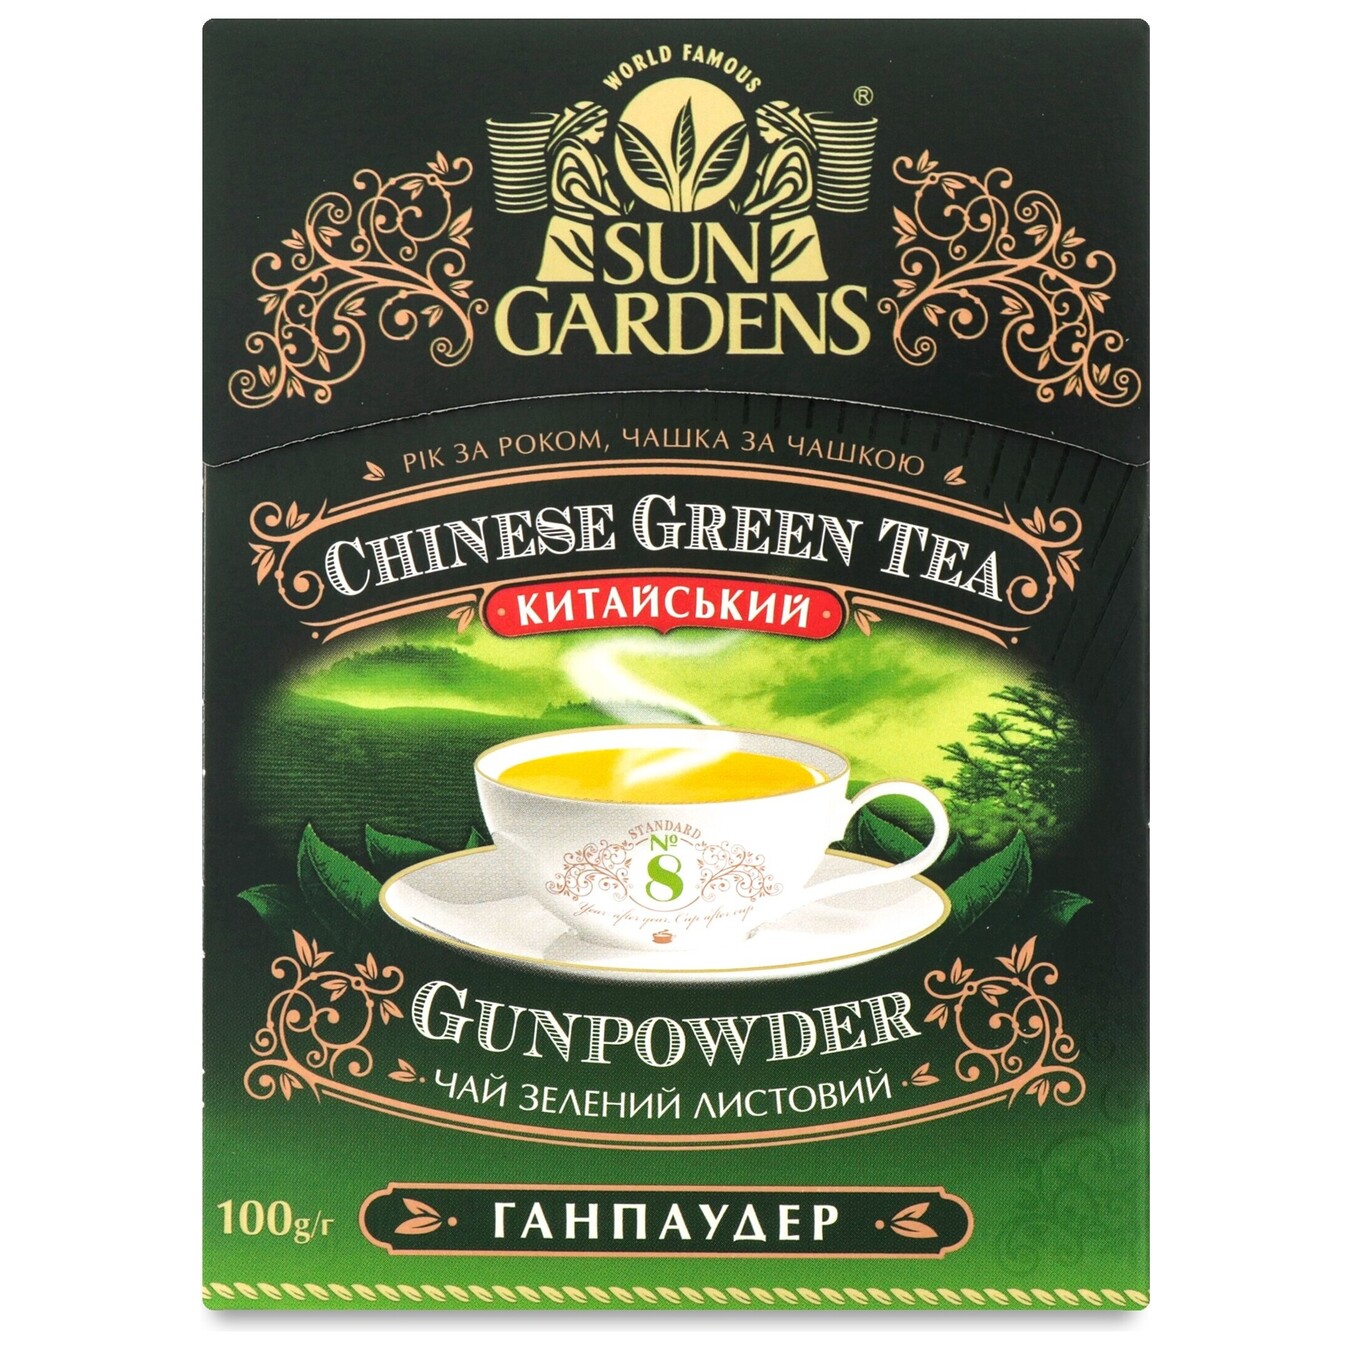 Чай зелений Sun Gardens китайський байховий крупнолистовий вищого гатунку Ганпаудер 100г